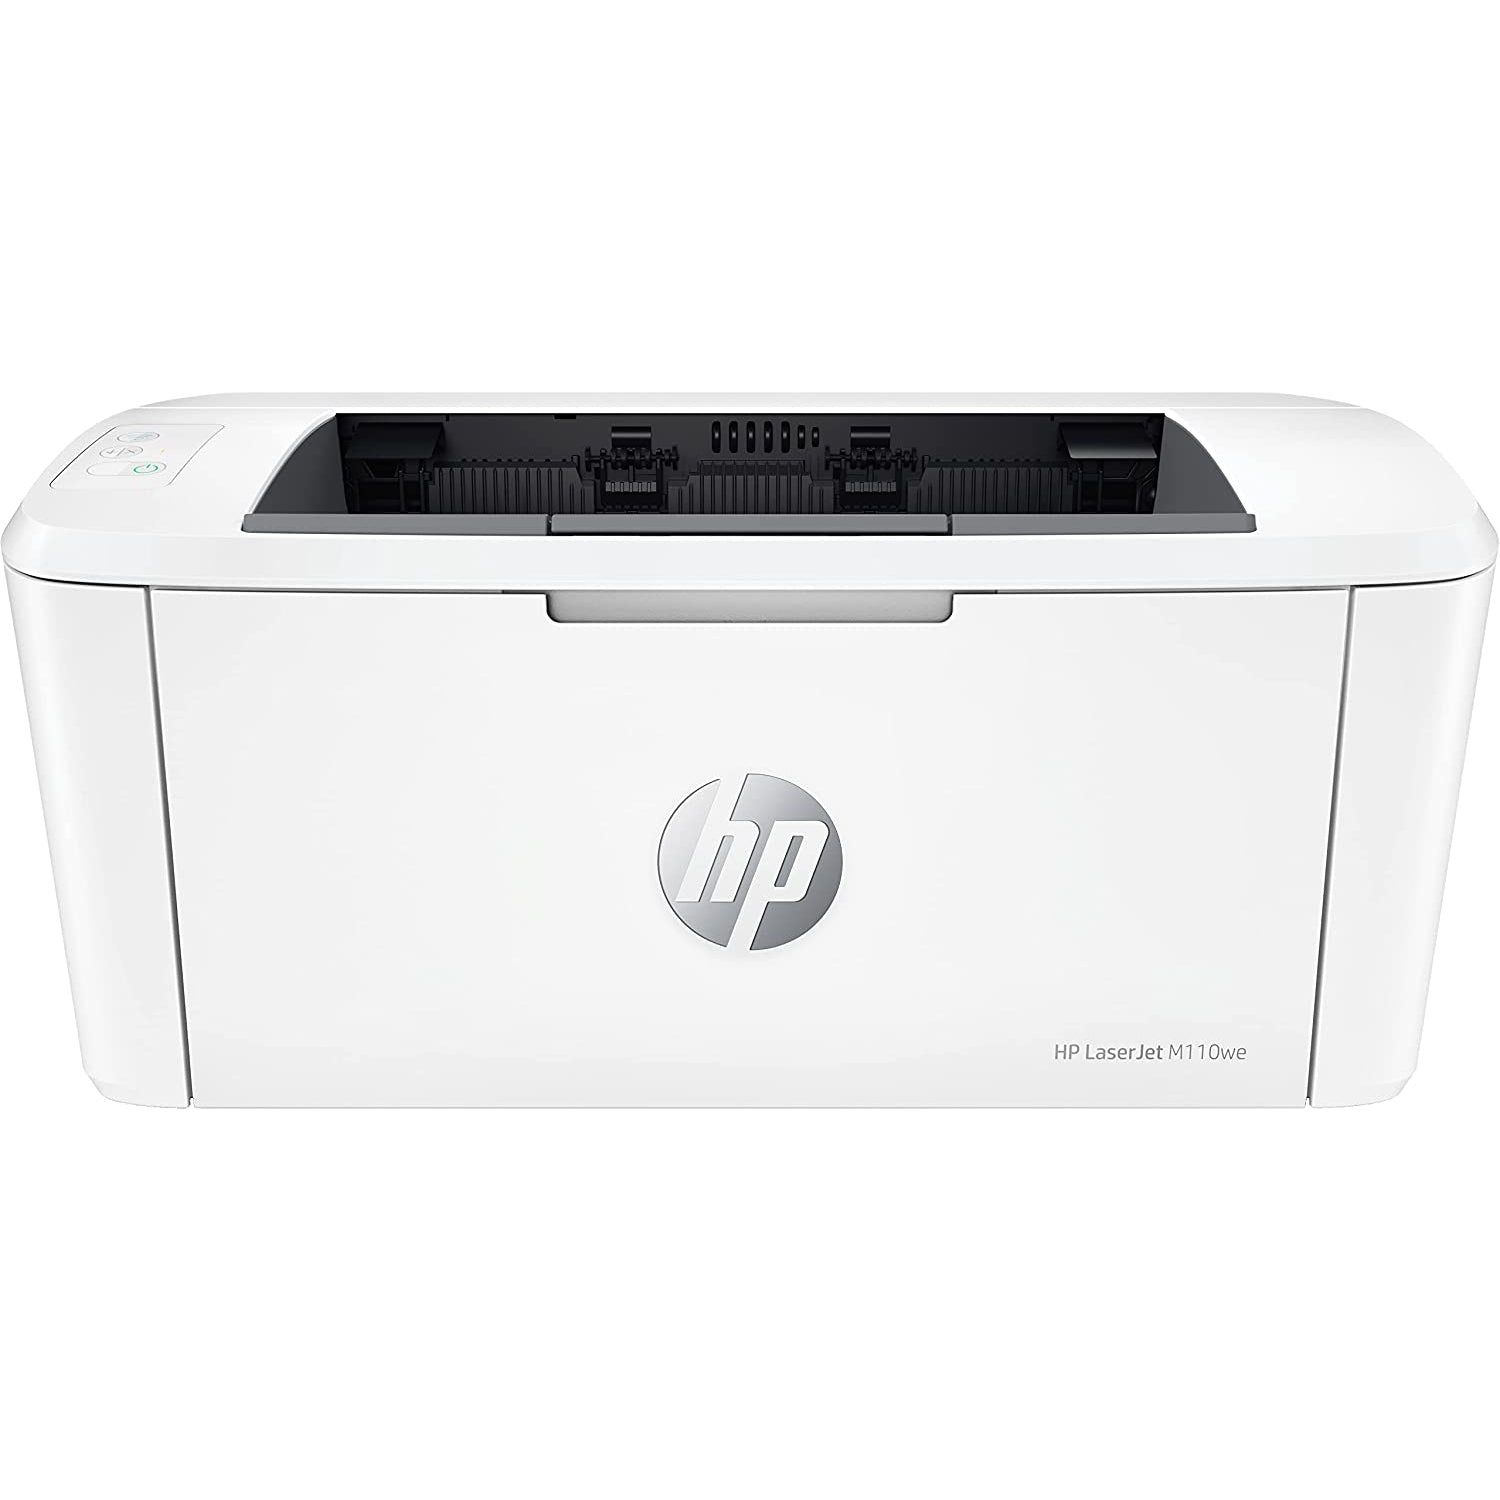 HP LaserJet M110we Wireless Mono Printer - New